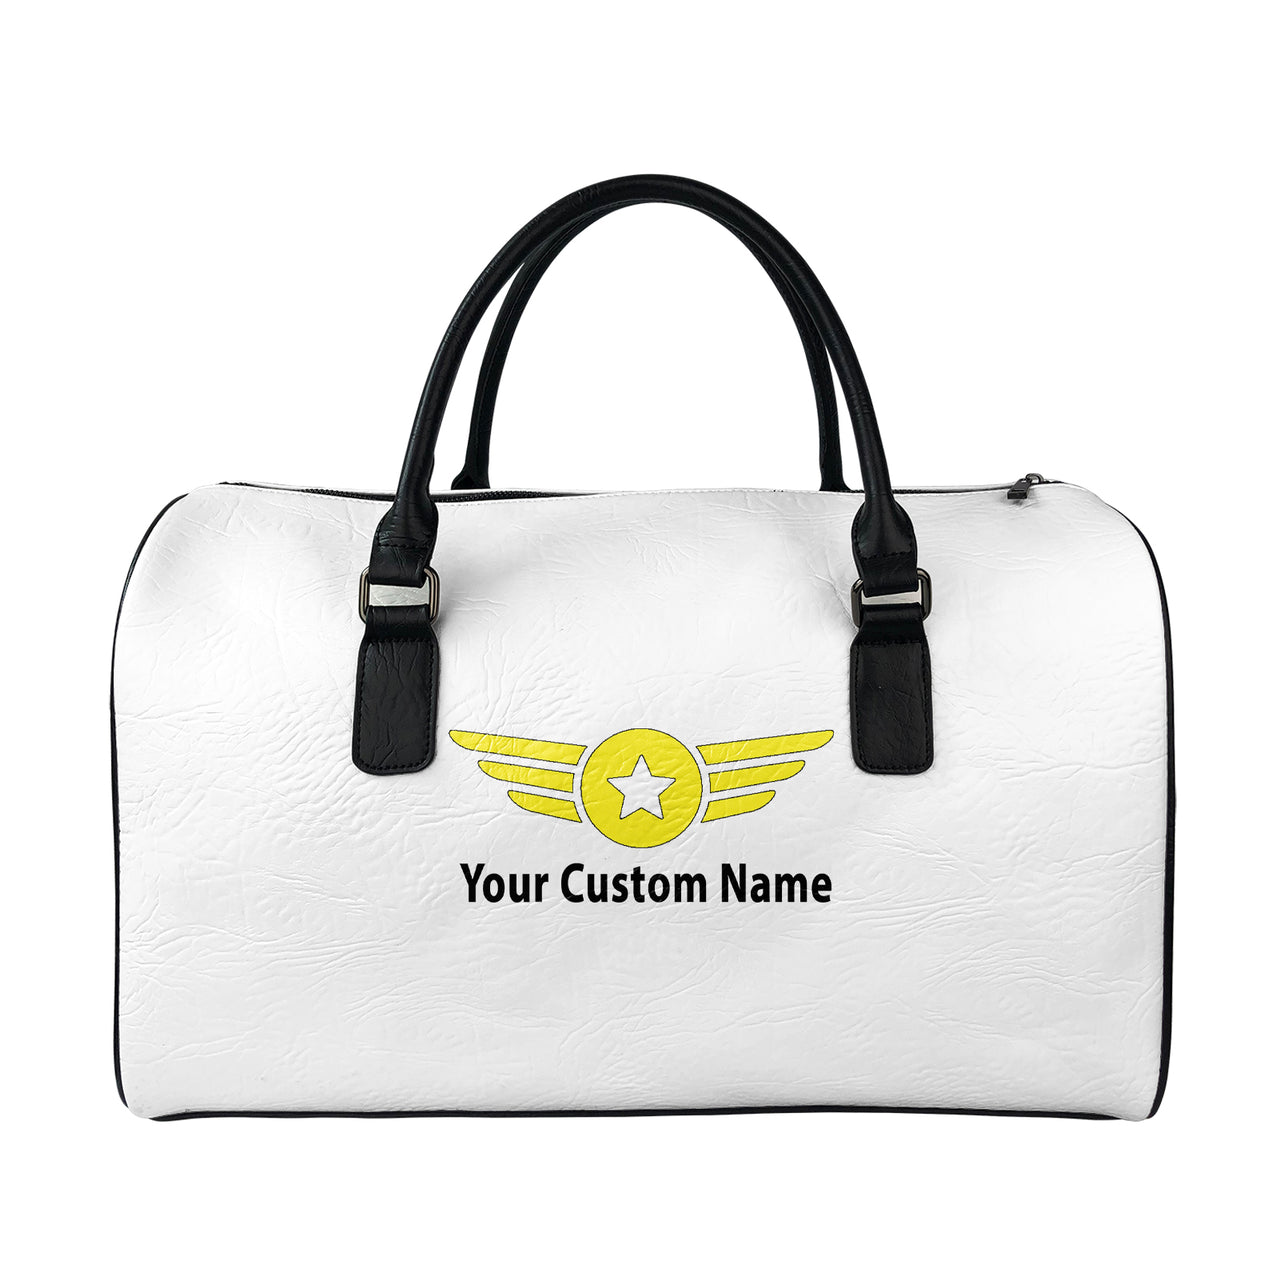 Custom Name (Badge 4) Designed Leather Travel Bag